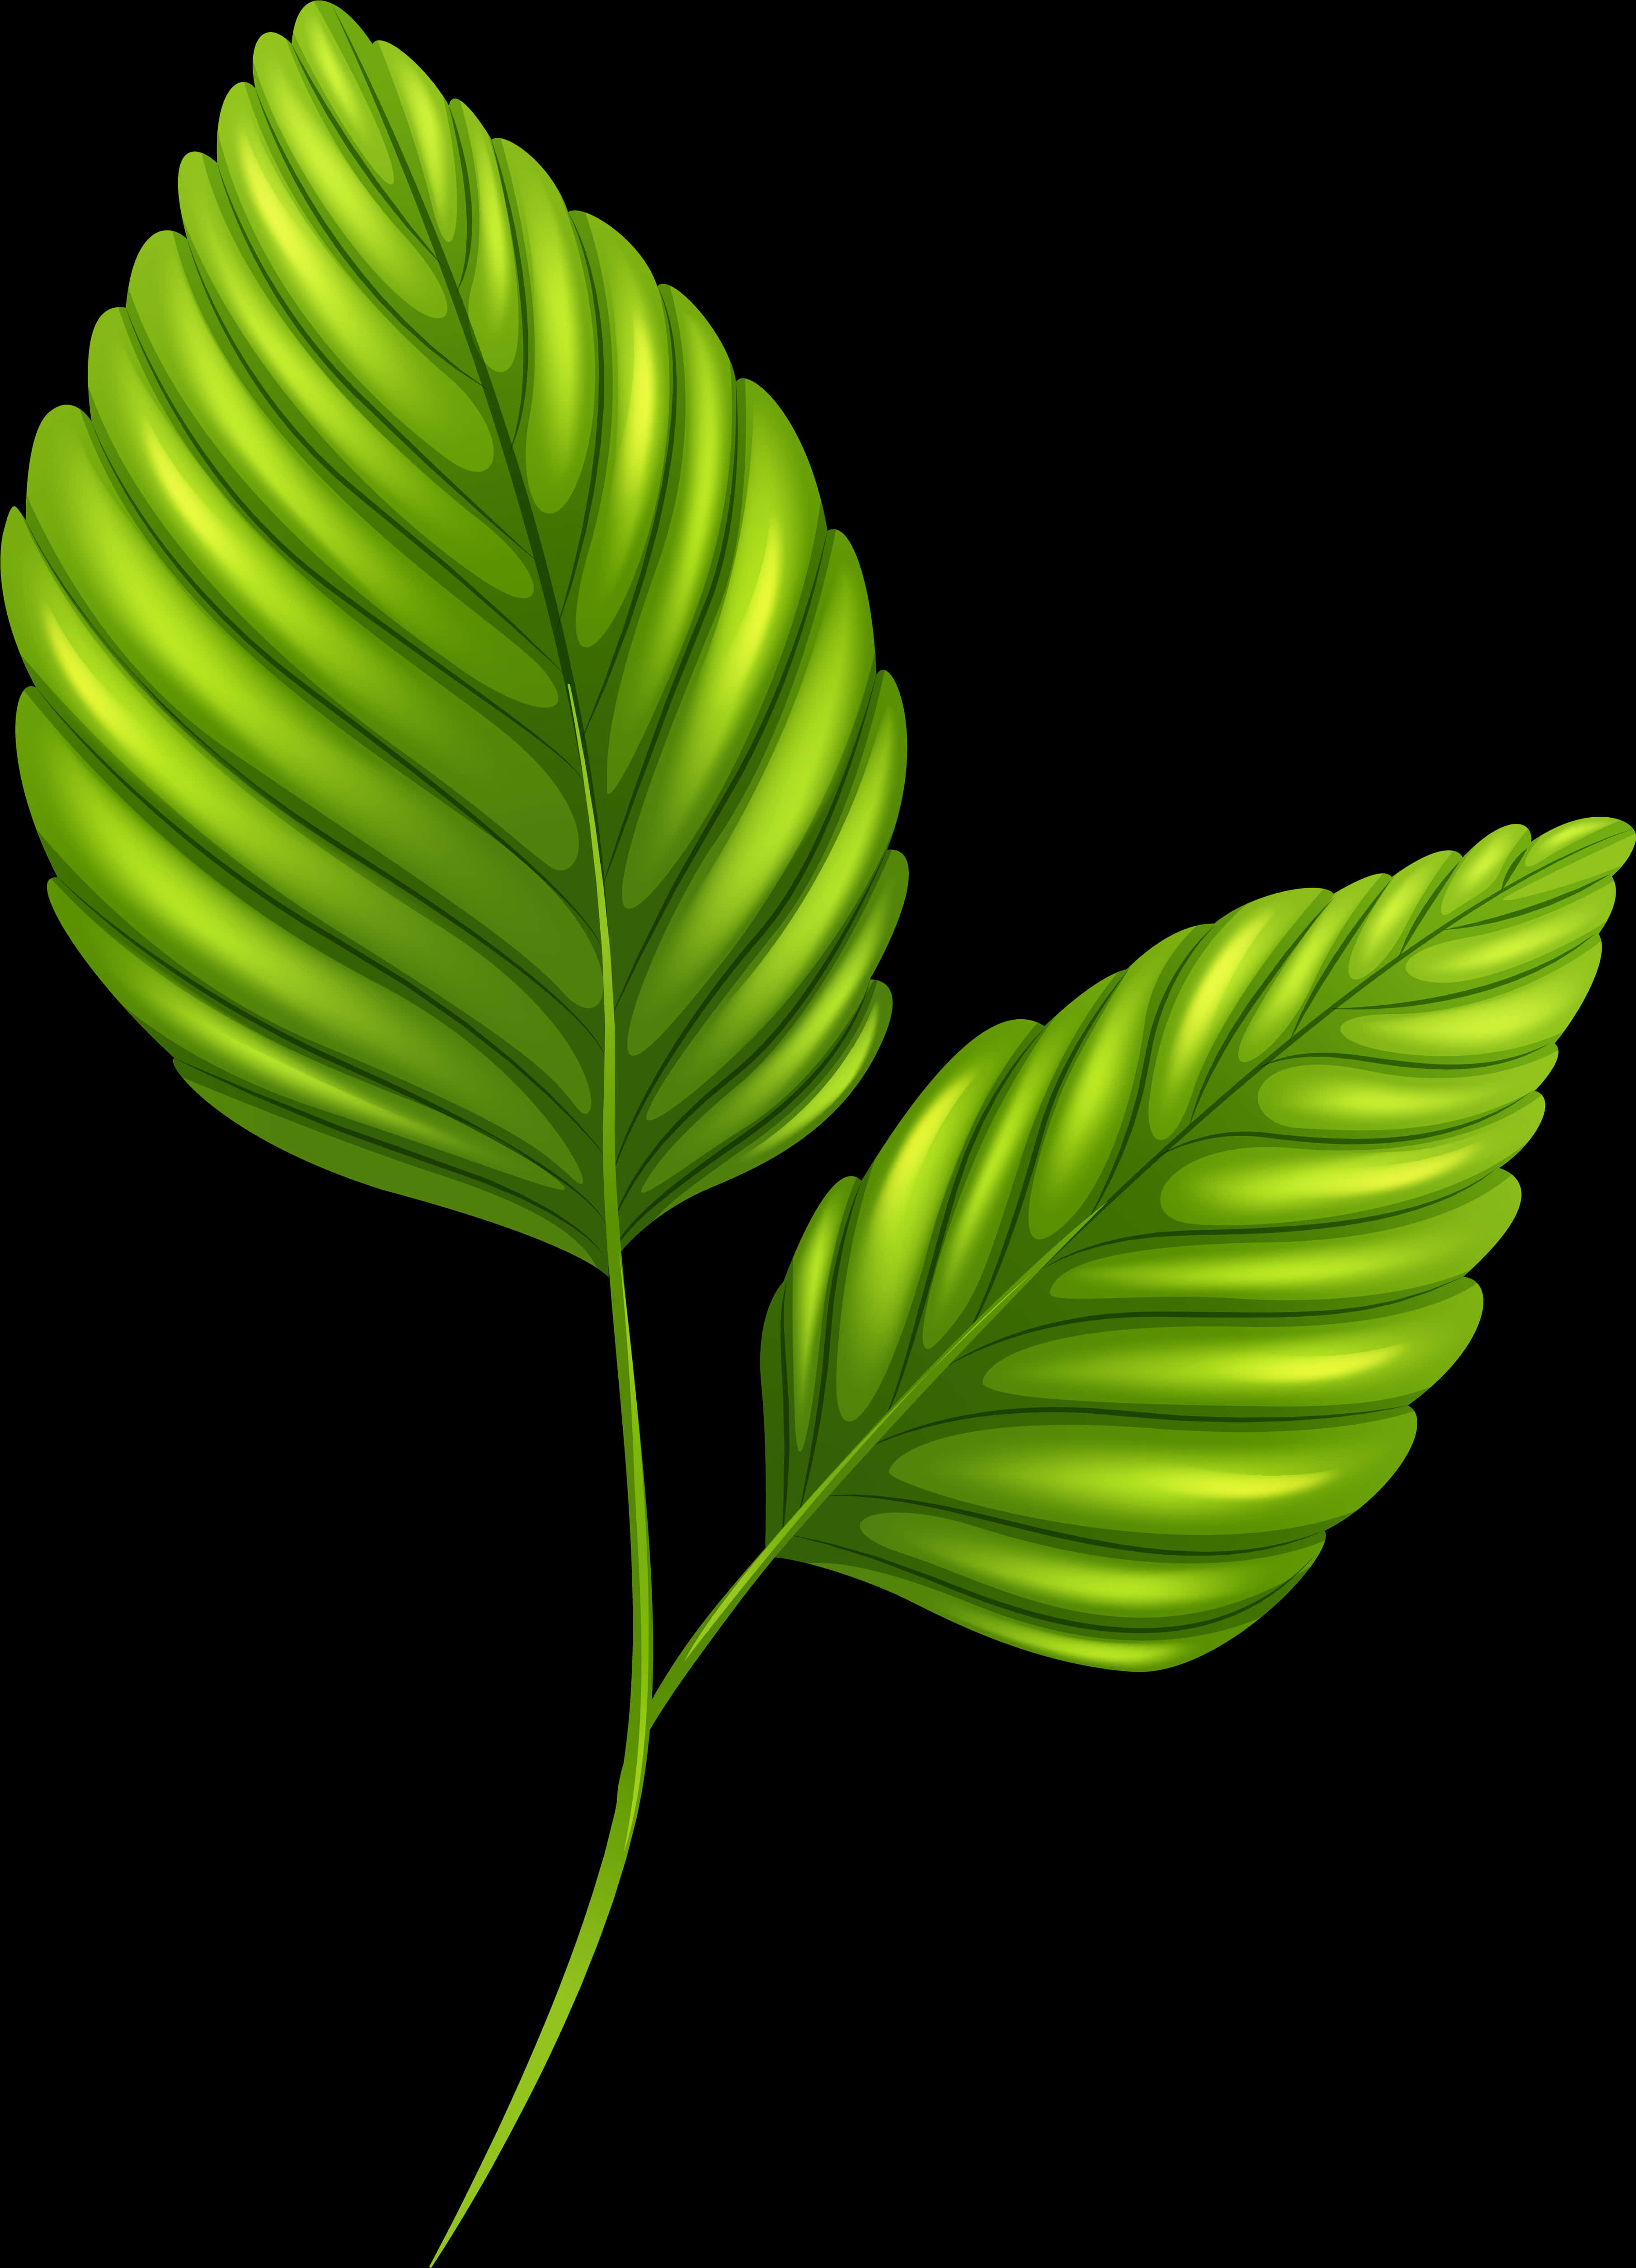 Vibrant Green Leaves Illustration PNG image